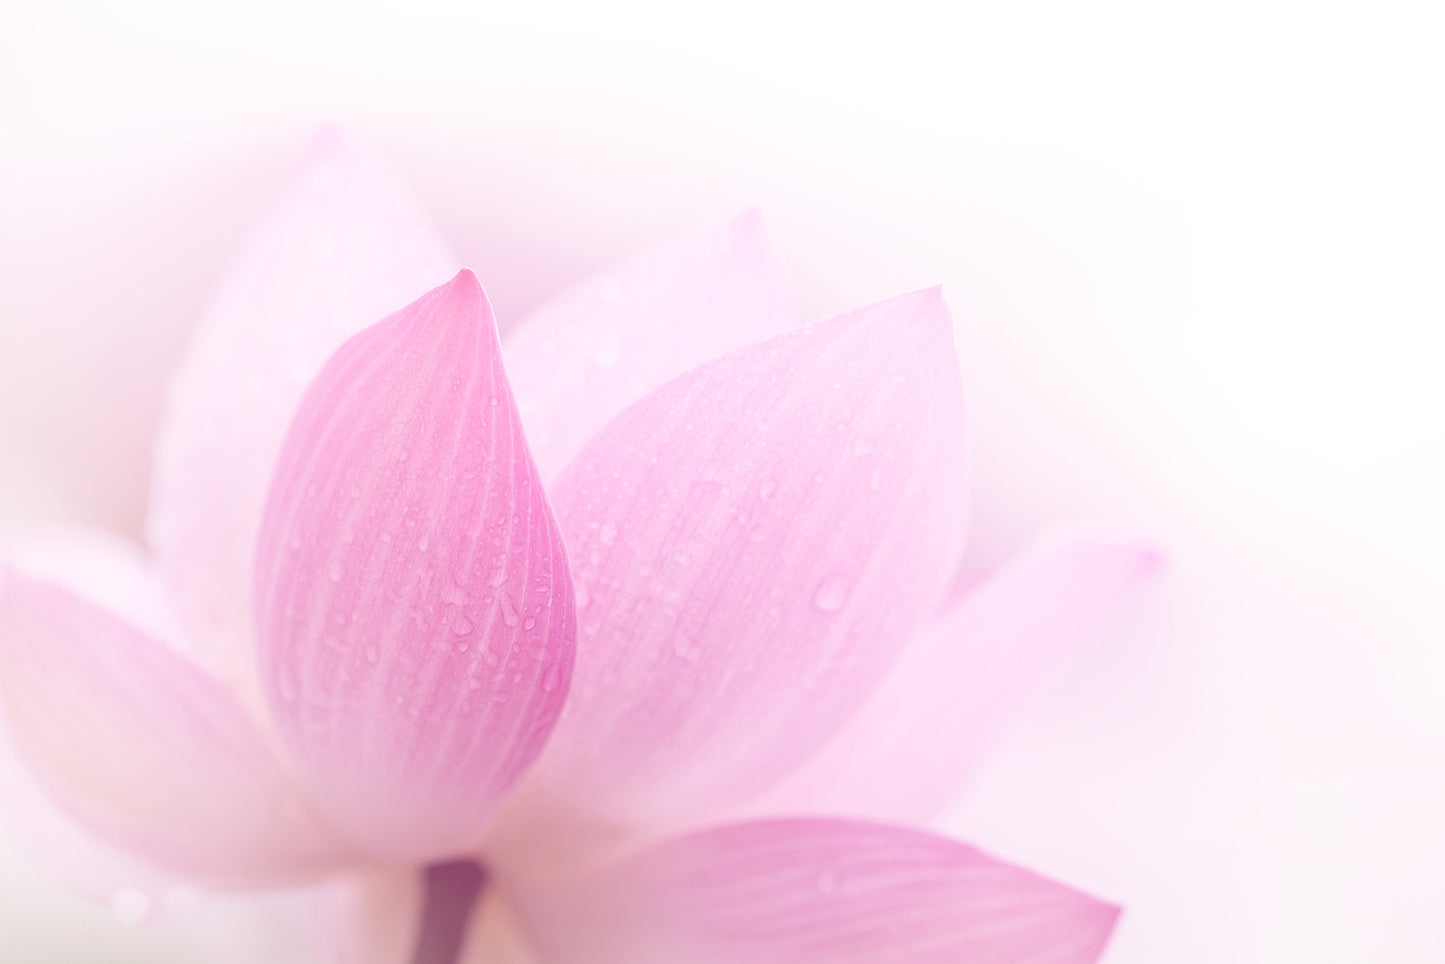 Peaceful Close-up Pink Lotus Petal Fine Art Canvas Print  - PIPAFINEART